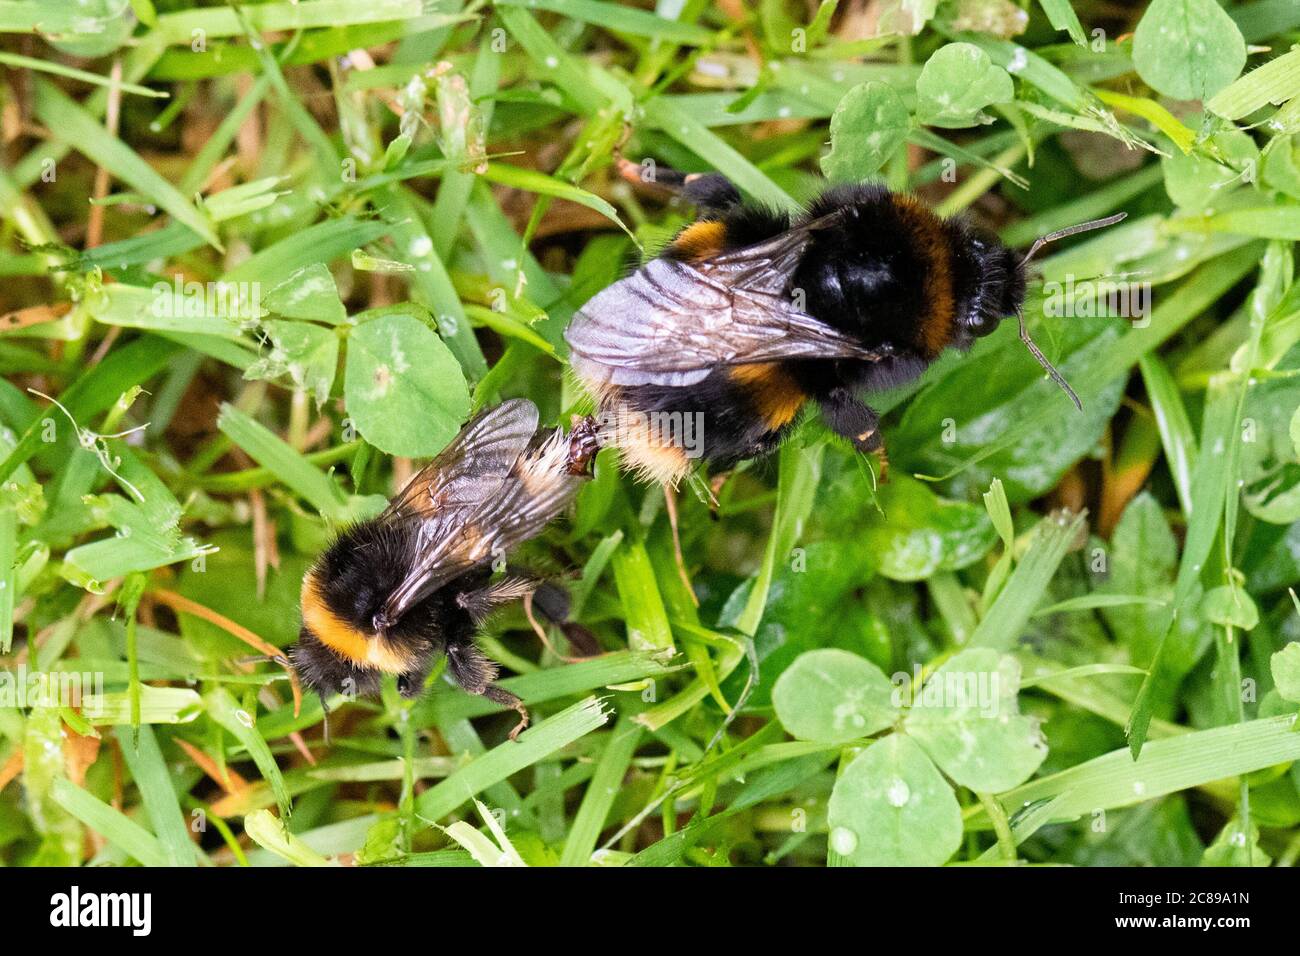 Buff-tailed bumblebees (Bombus terrestris) mating on garden lawn - Scotland, UK Stock Photo